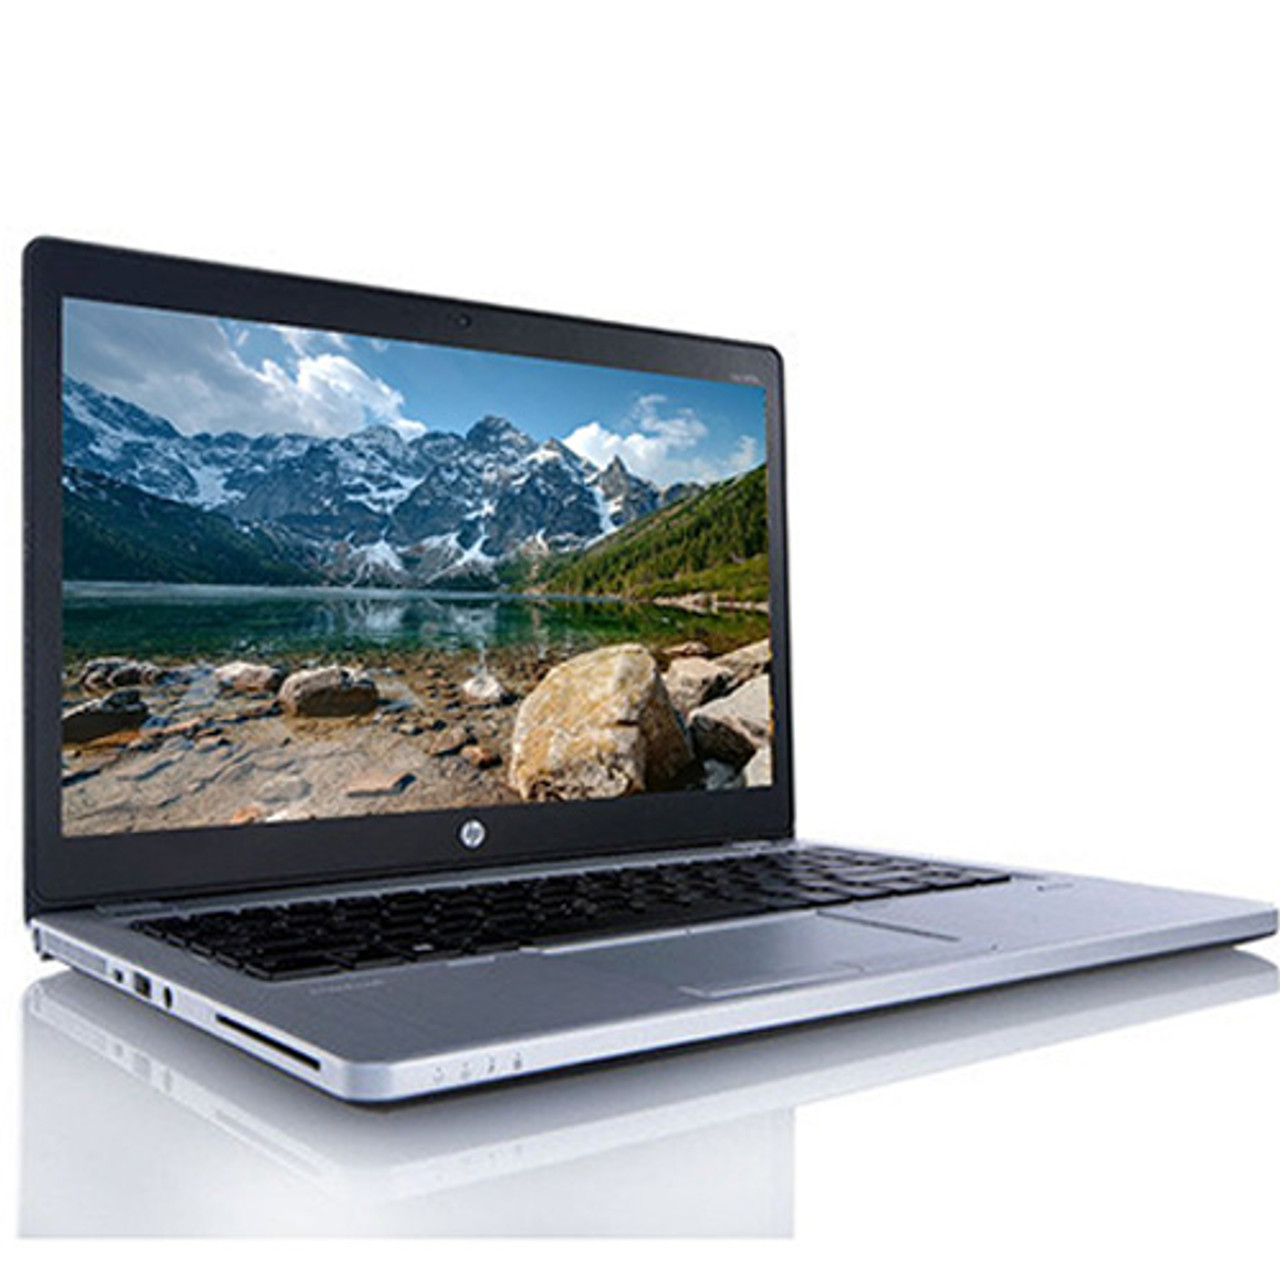 HP EliteBook Folio Intel Quad-Core i7 Laptop 4th Gen 16GB SSD Windows 10 Pro with Backlit Keyboard